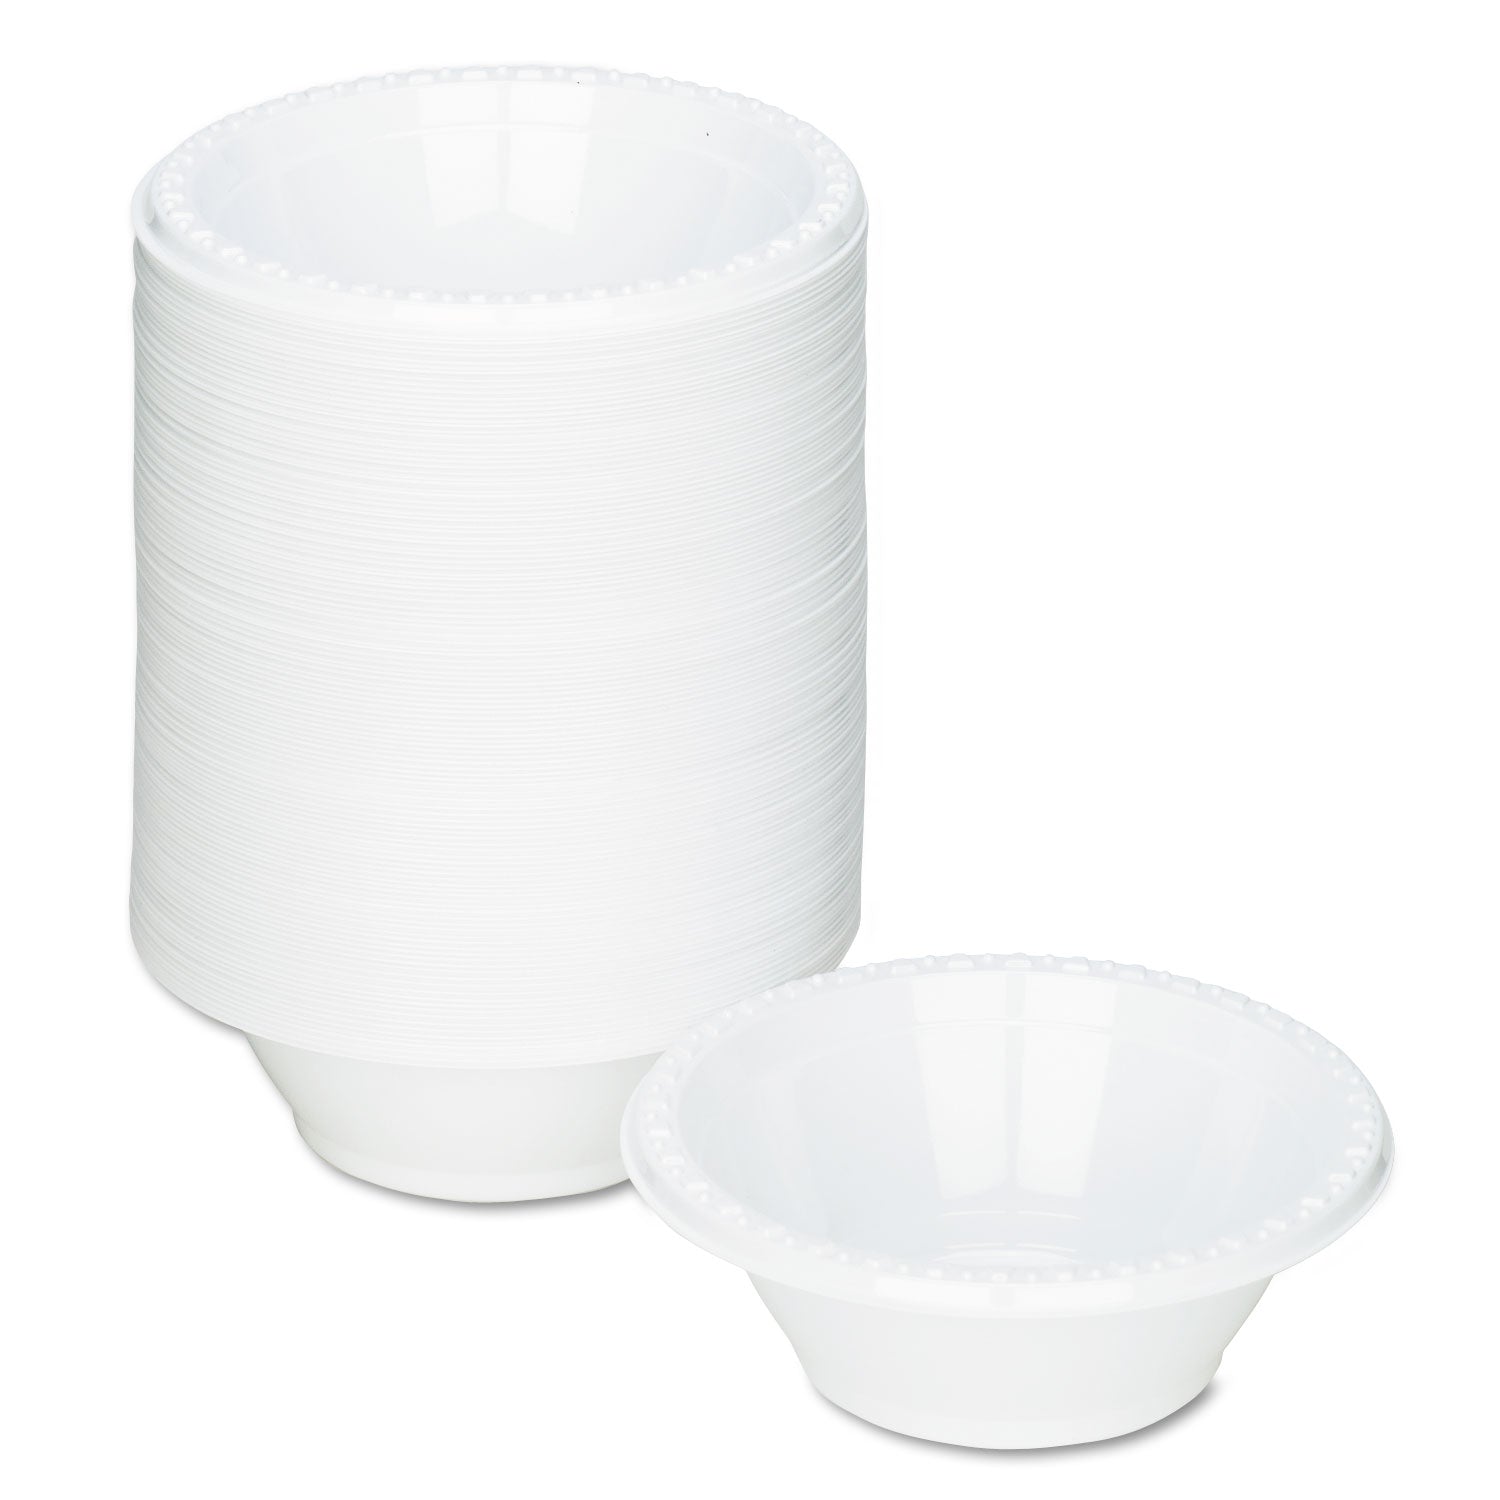 Plastic Dinnerware, Bowls, 5 oz, White, 125/Pack - 